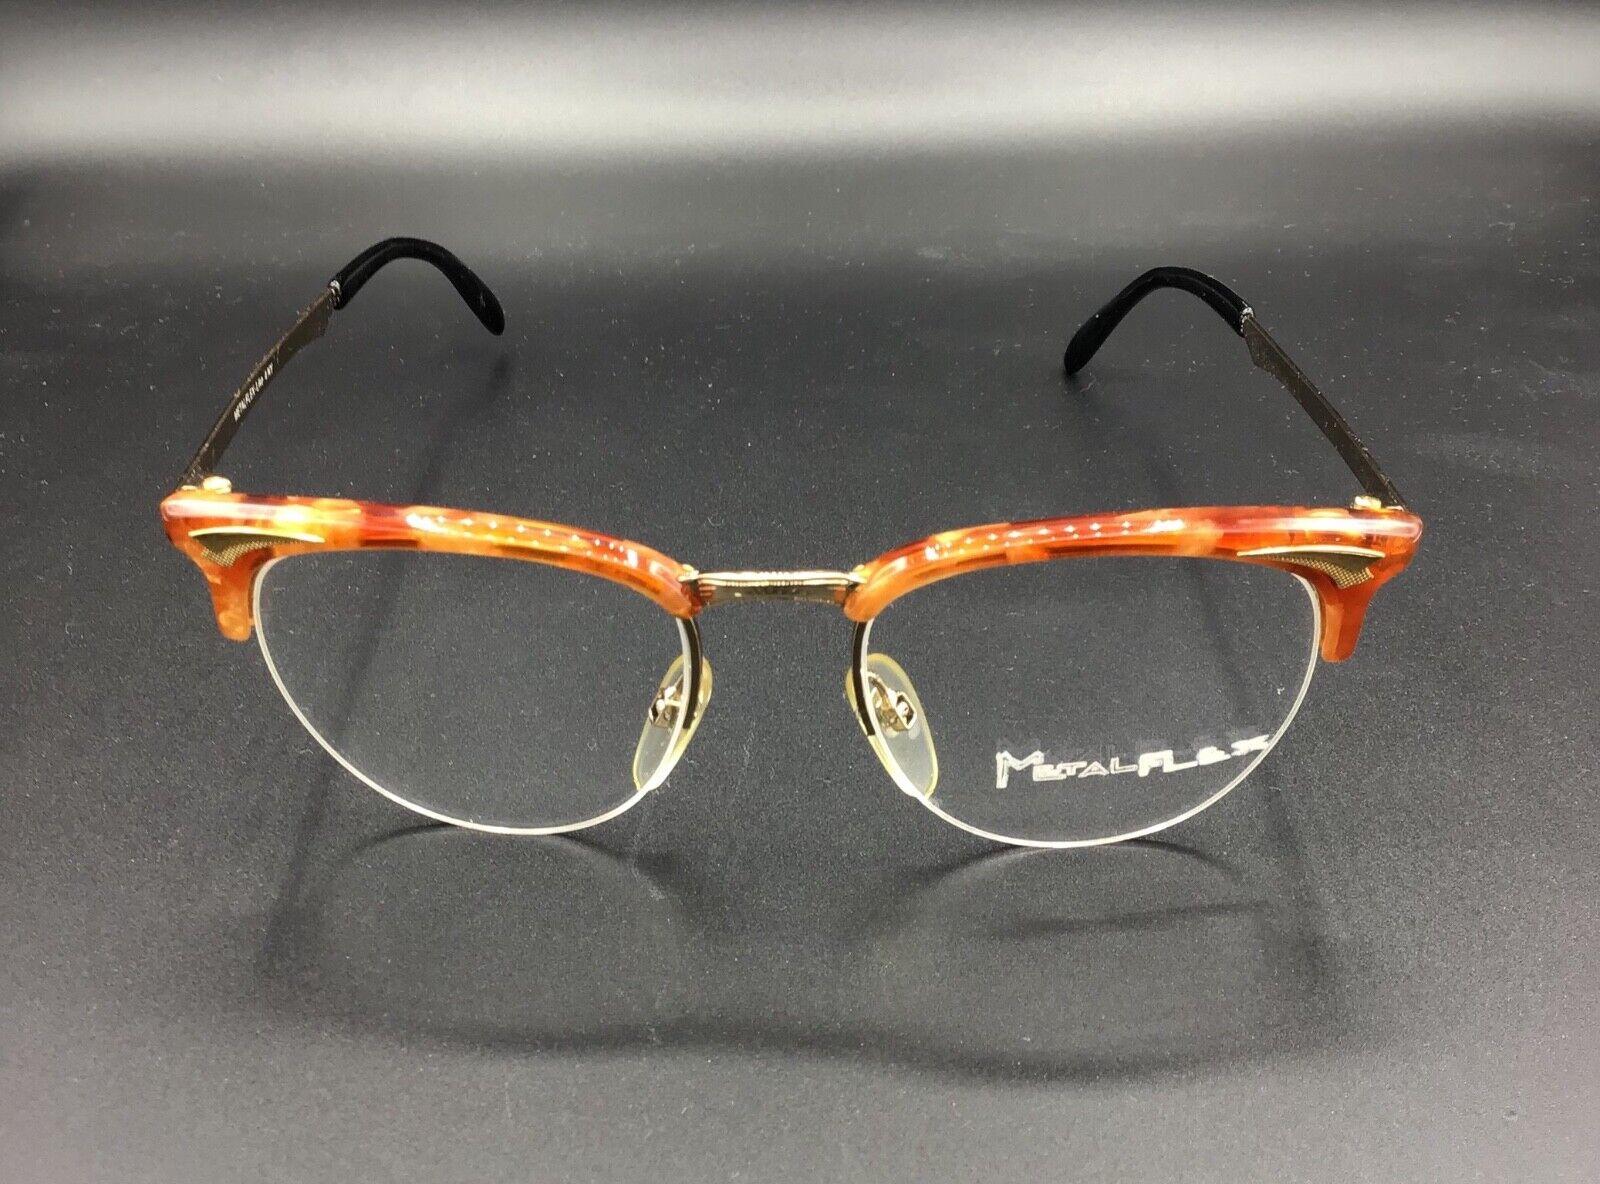 Metalflex occhiale vintage Eyewear model Like 4 NY frame brillen lunettes